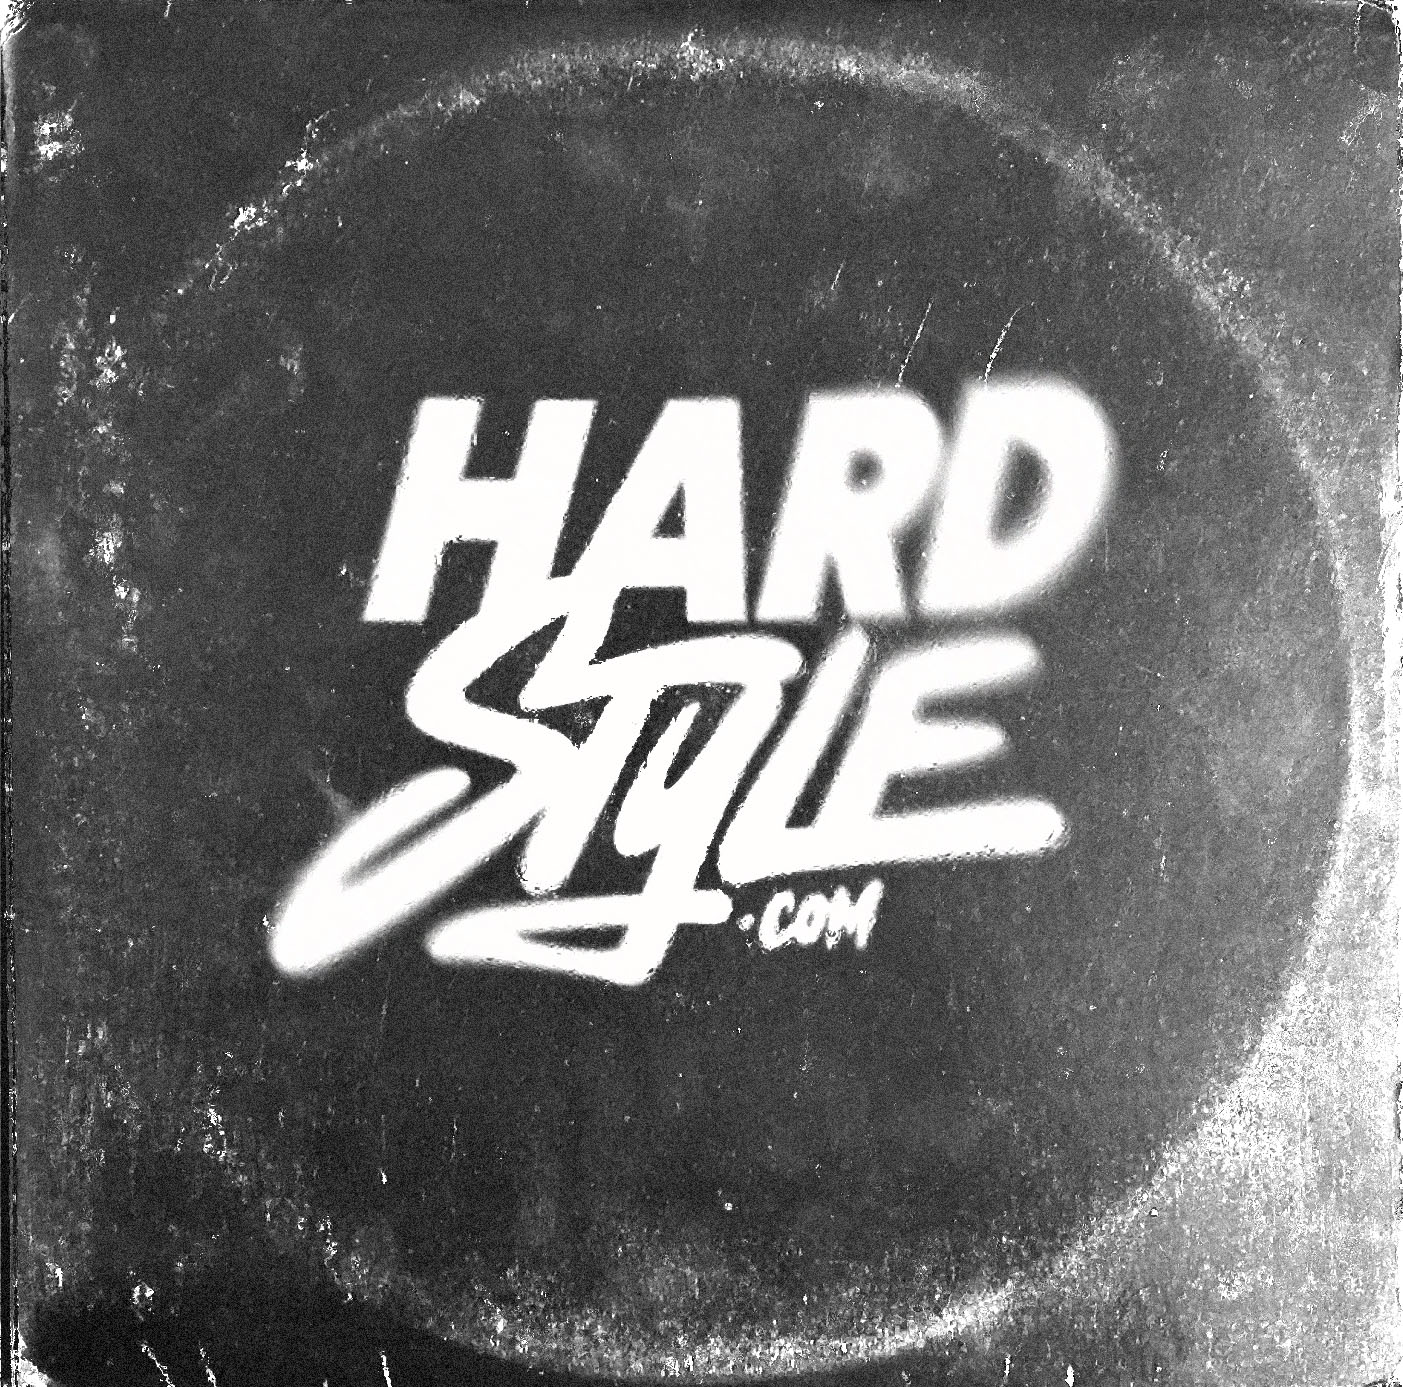 United (Hardstyle Assult Mix)